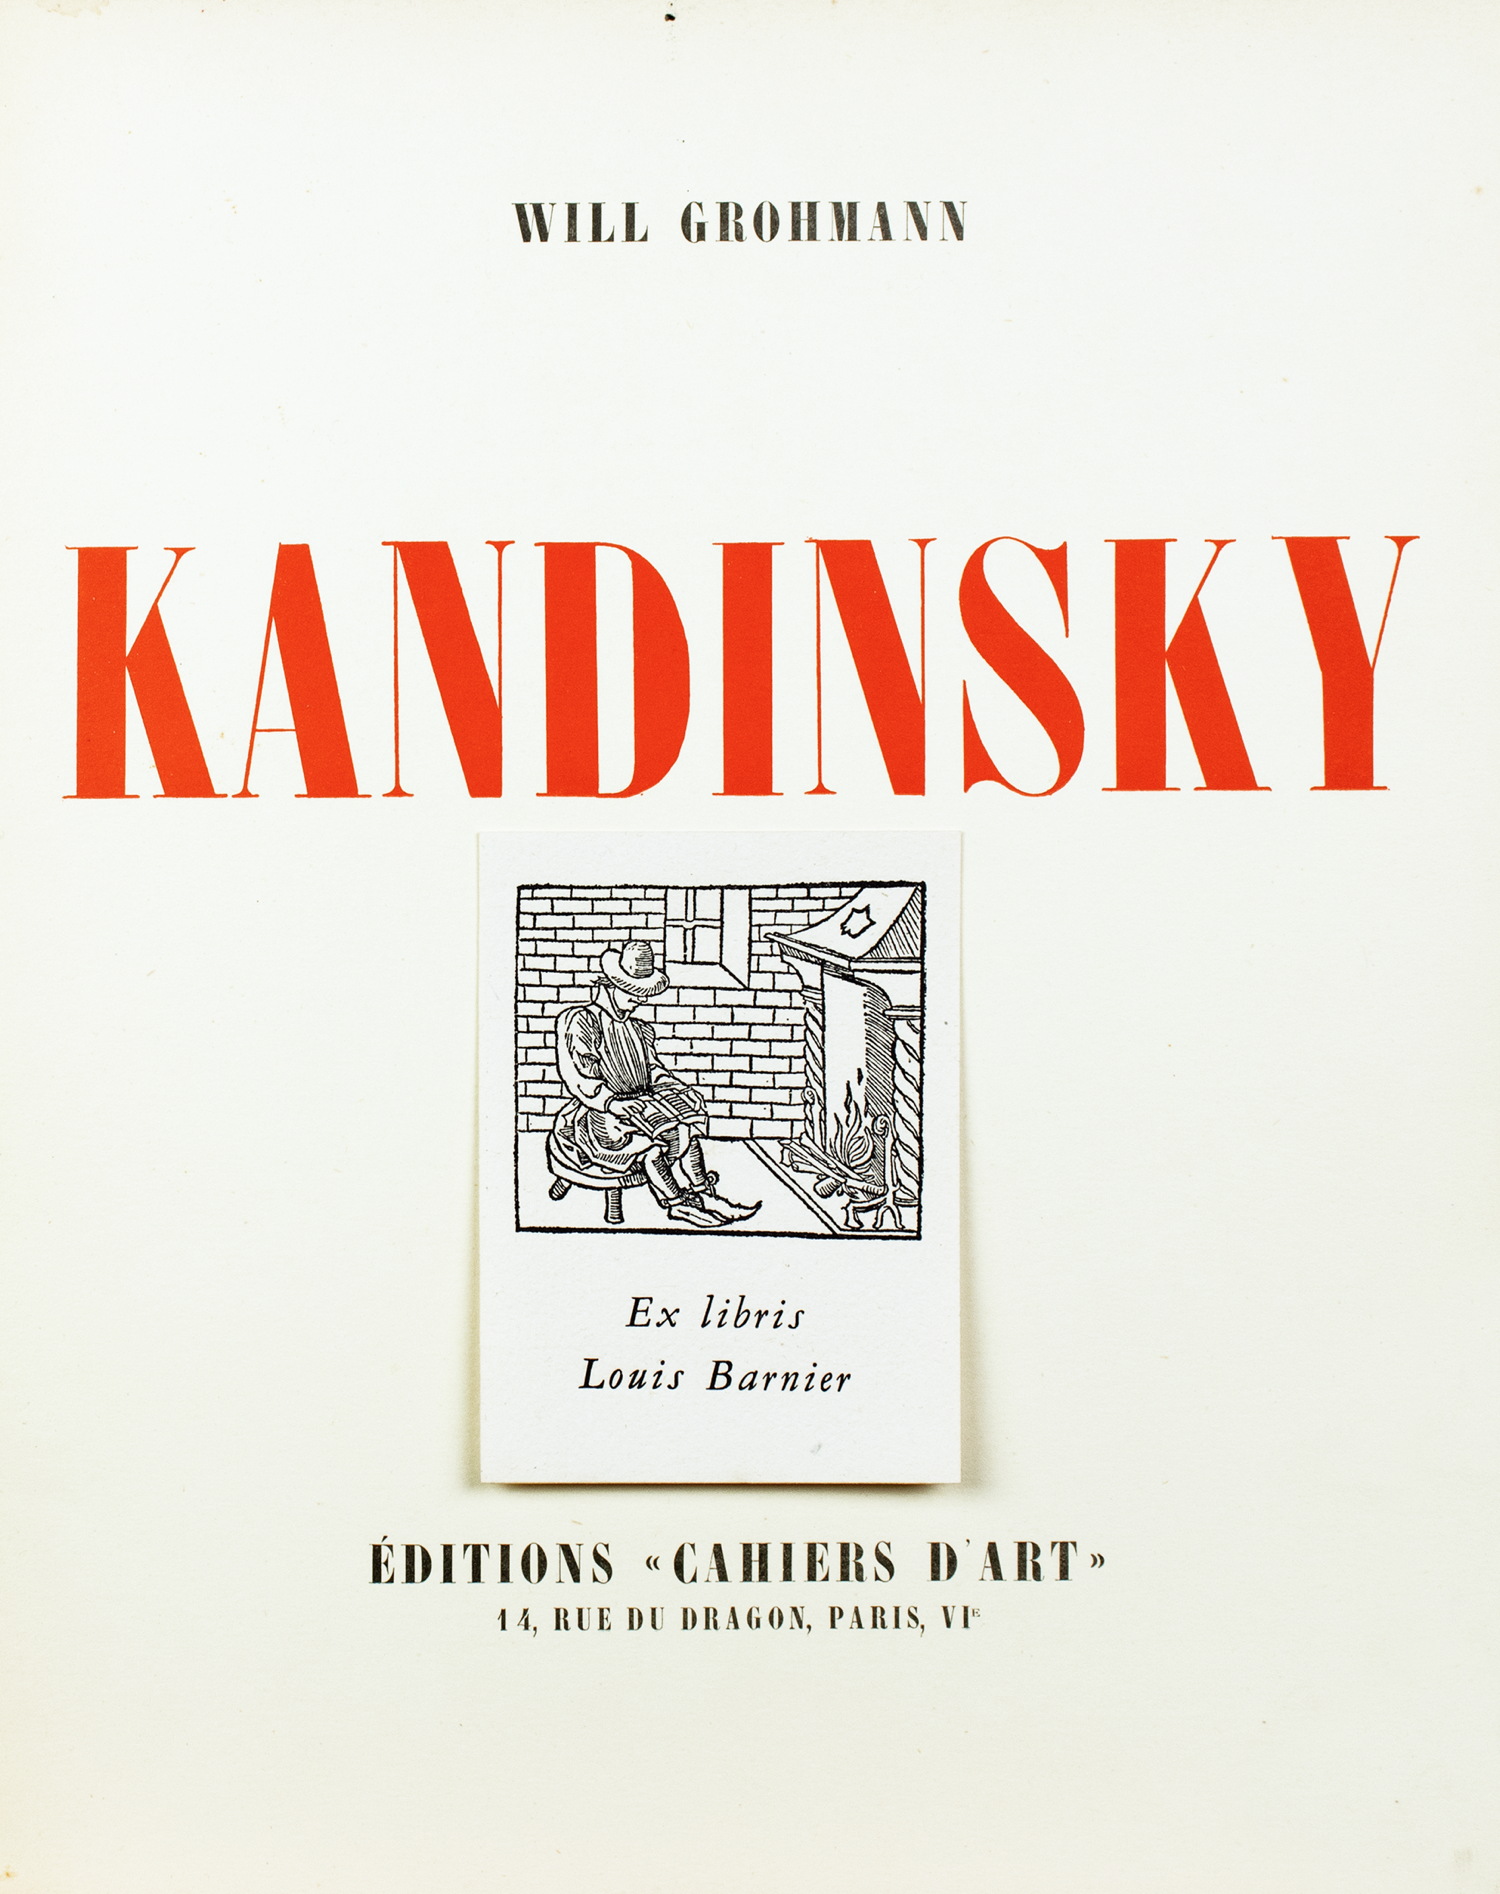 Will Grohmann. Kandinsky. - Image 2 of 2